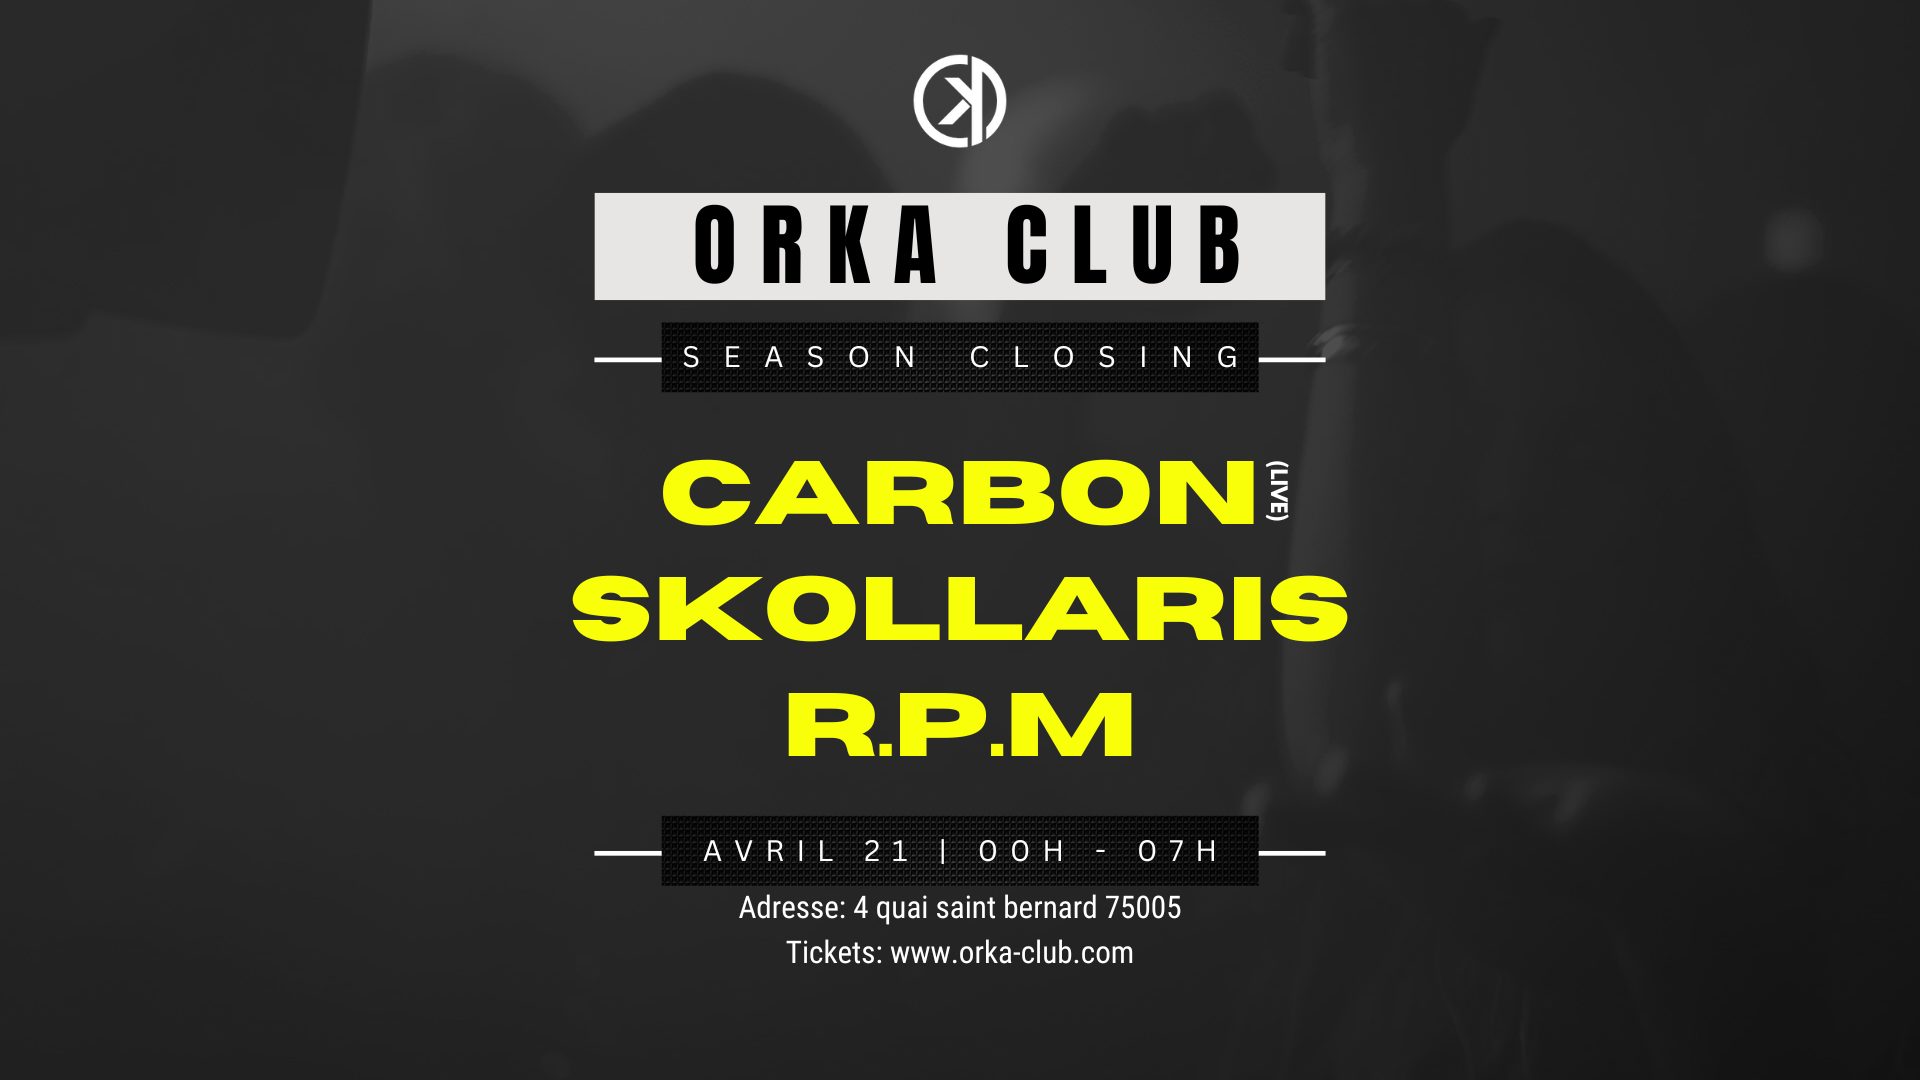 Affiche du closing d'Orka Club